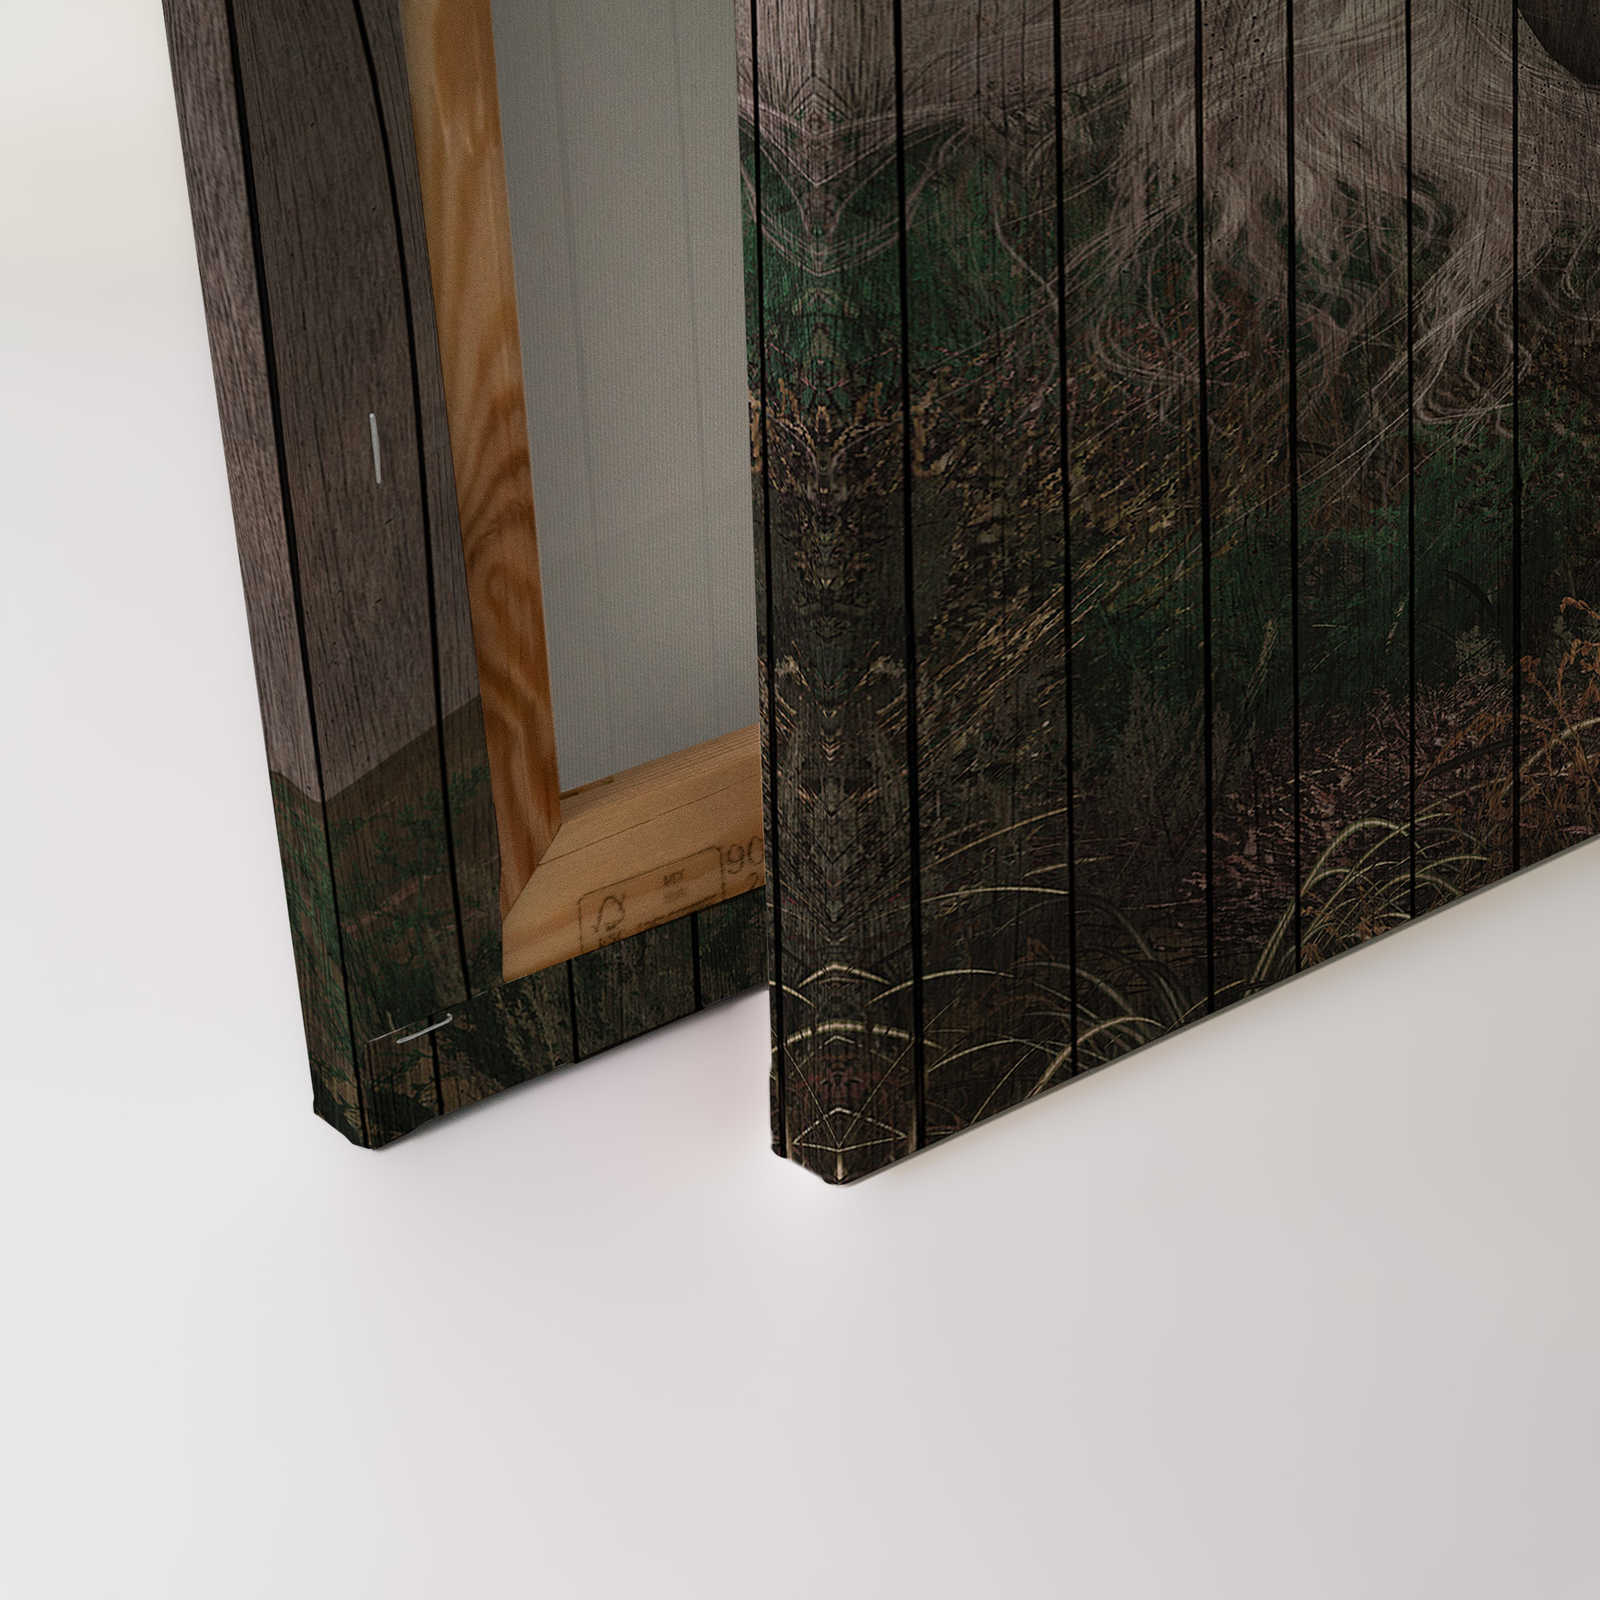             Fantasía 3 - Lienzo Unicolorcornio con aspecto de tablero de madera - 0,90 m x 0,60 m
        